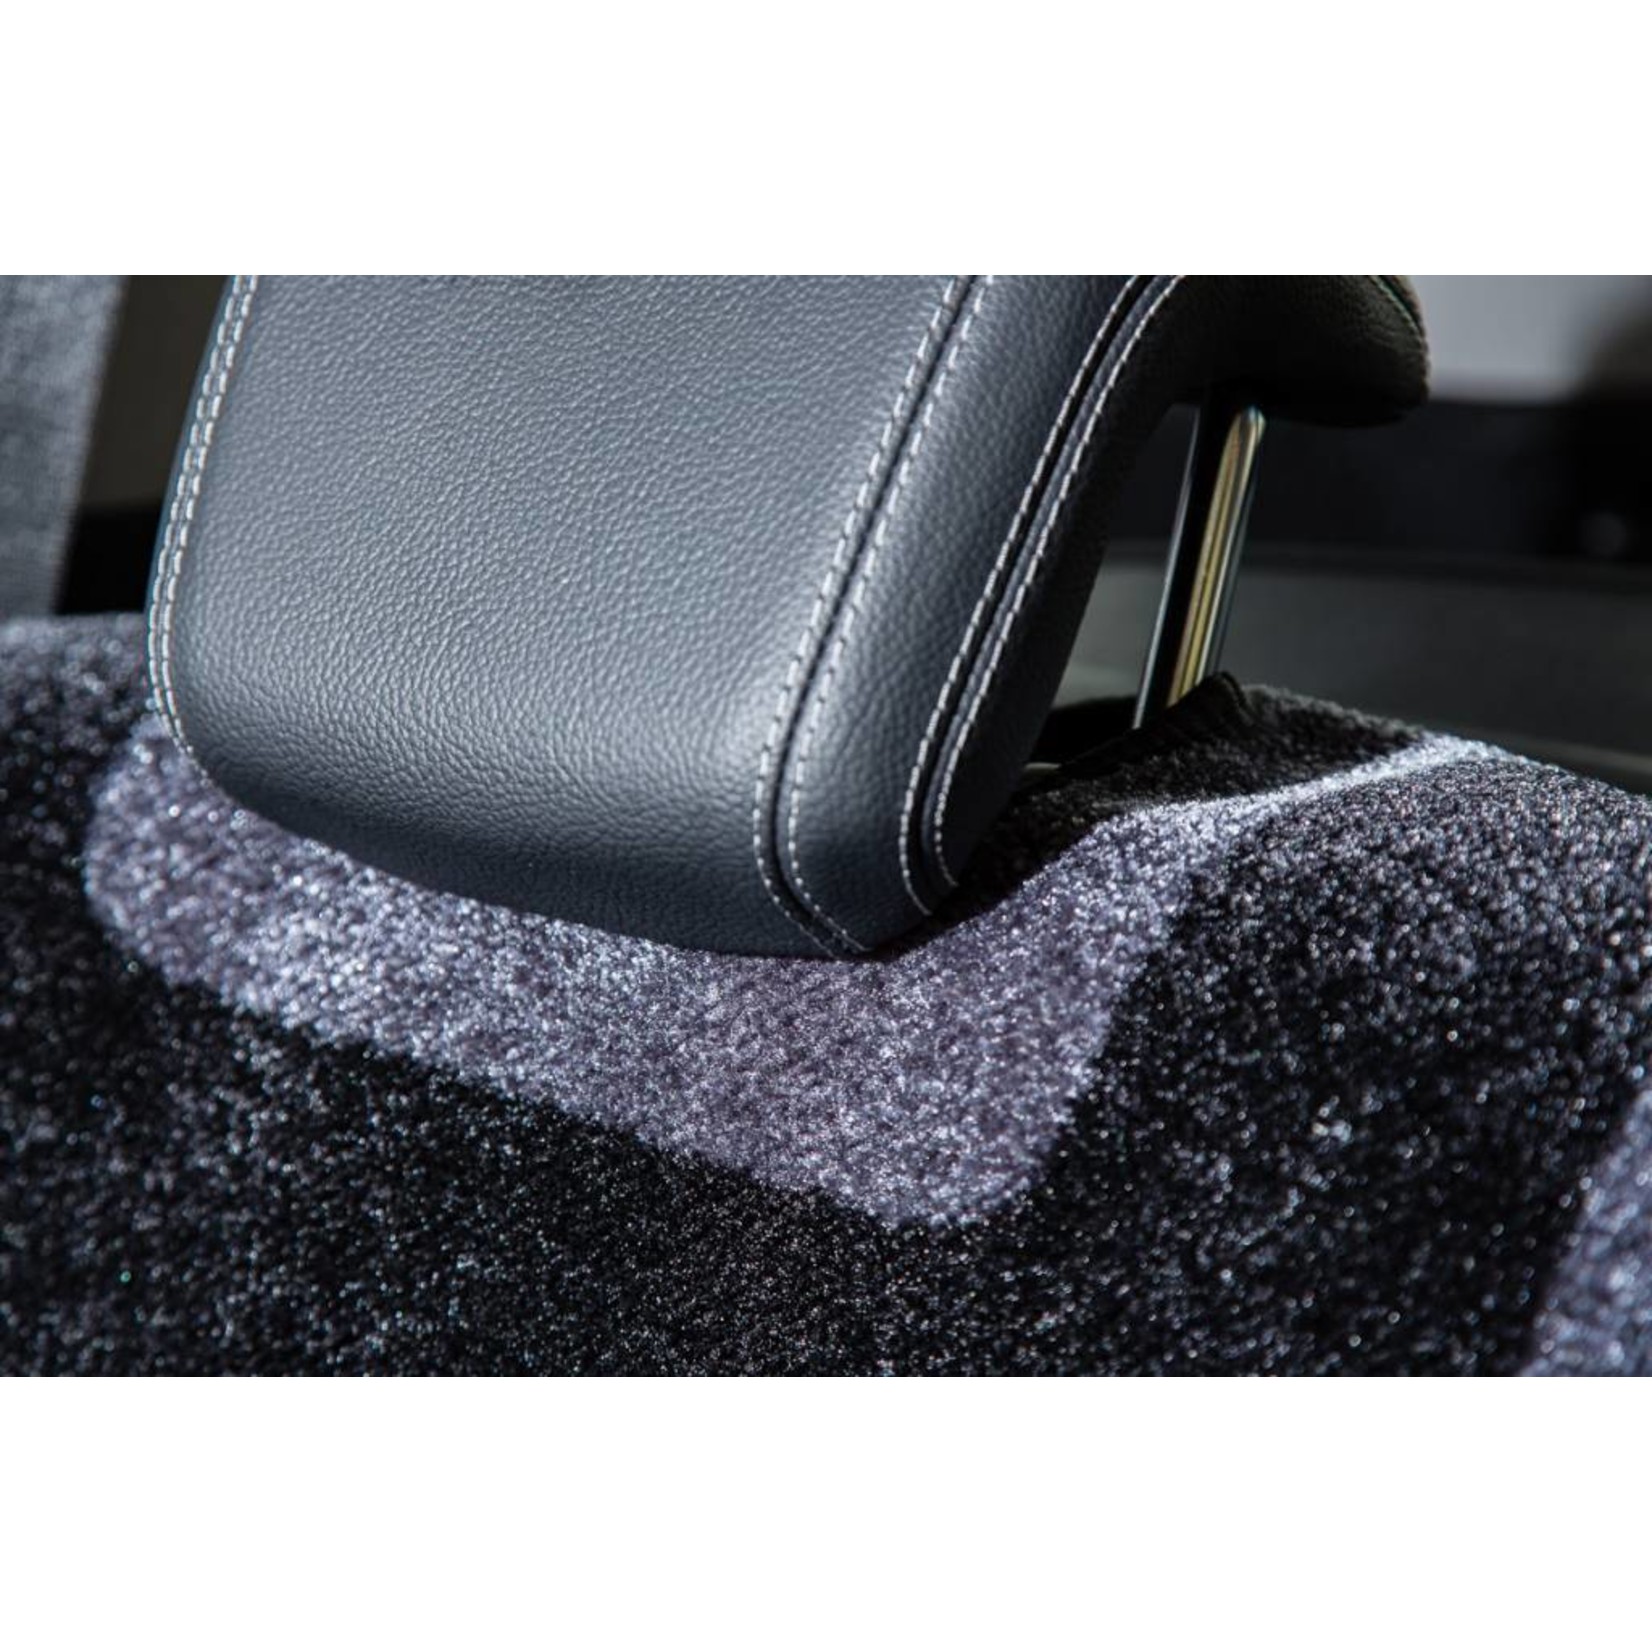 Pet Rebellion Car Seat Cover in Carpet, 57x140cm